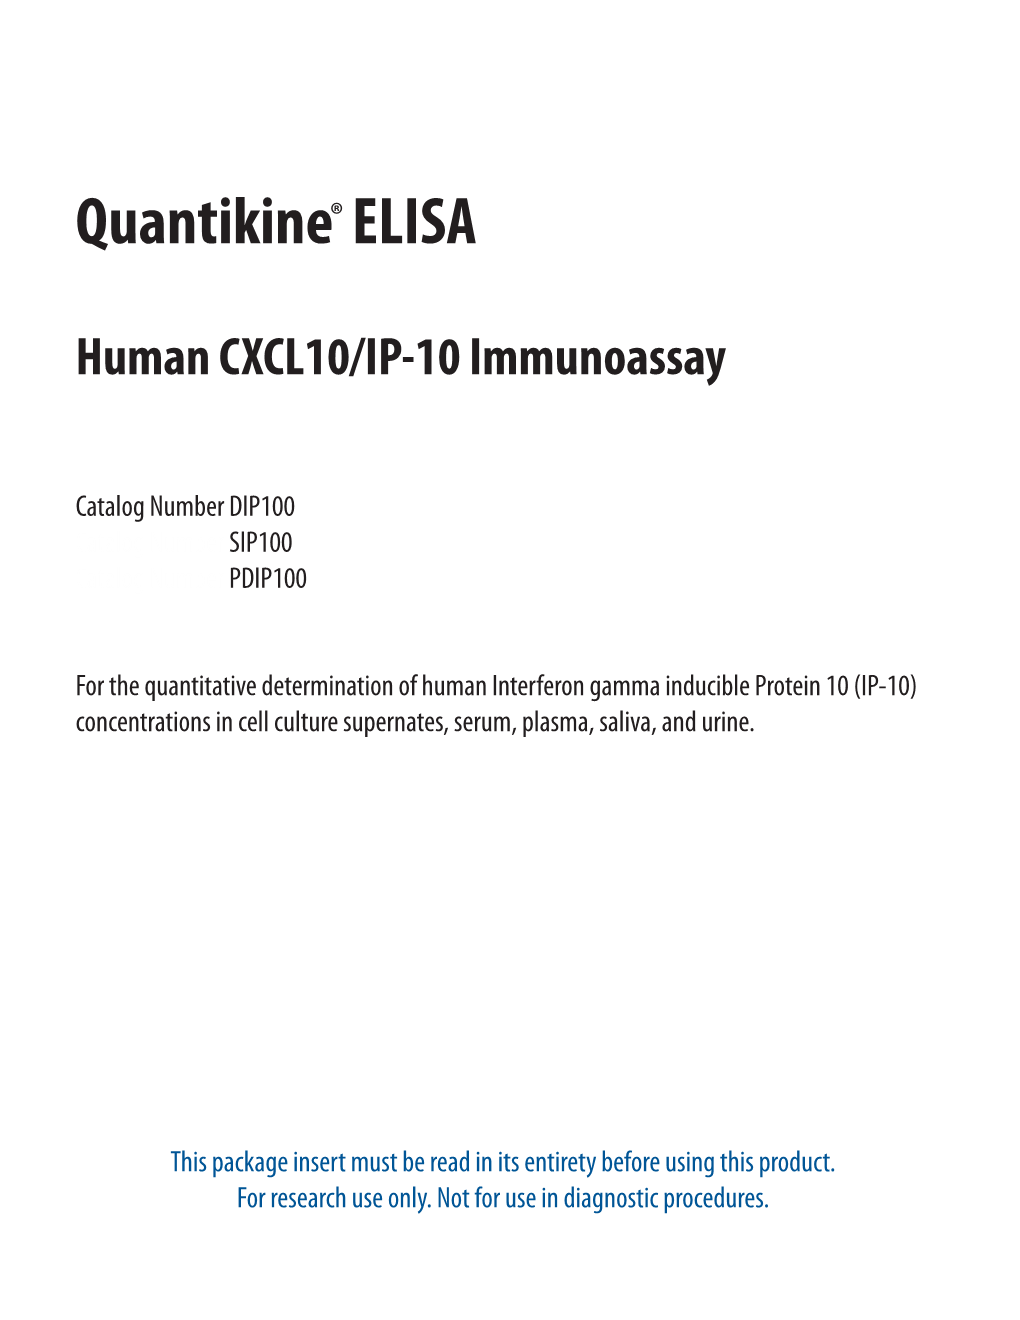 Human CXCL10/IP-10 Quantikine